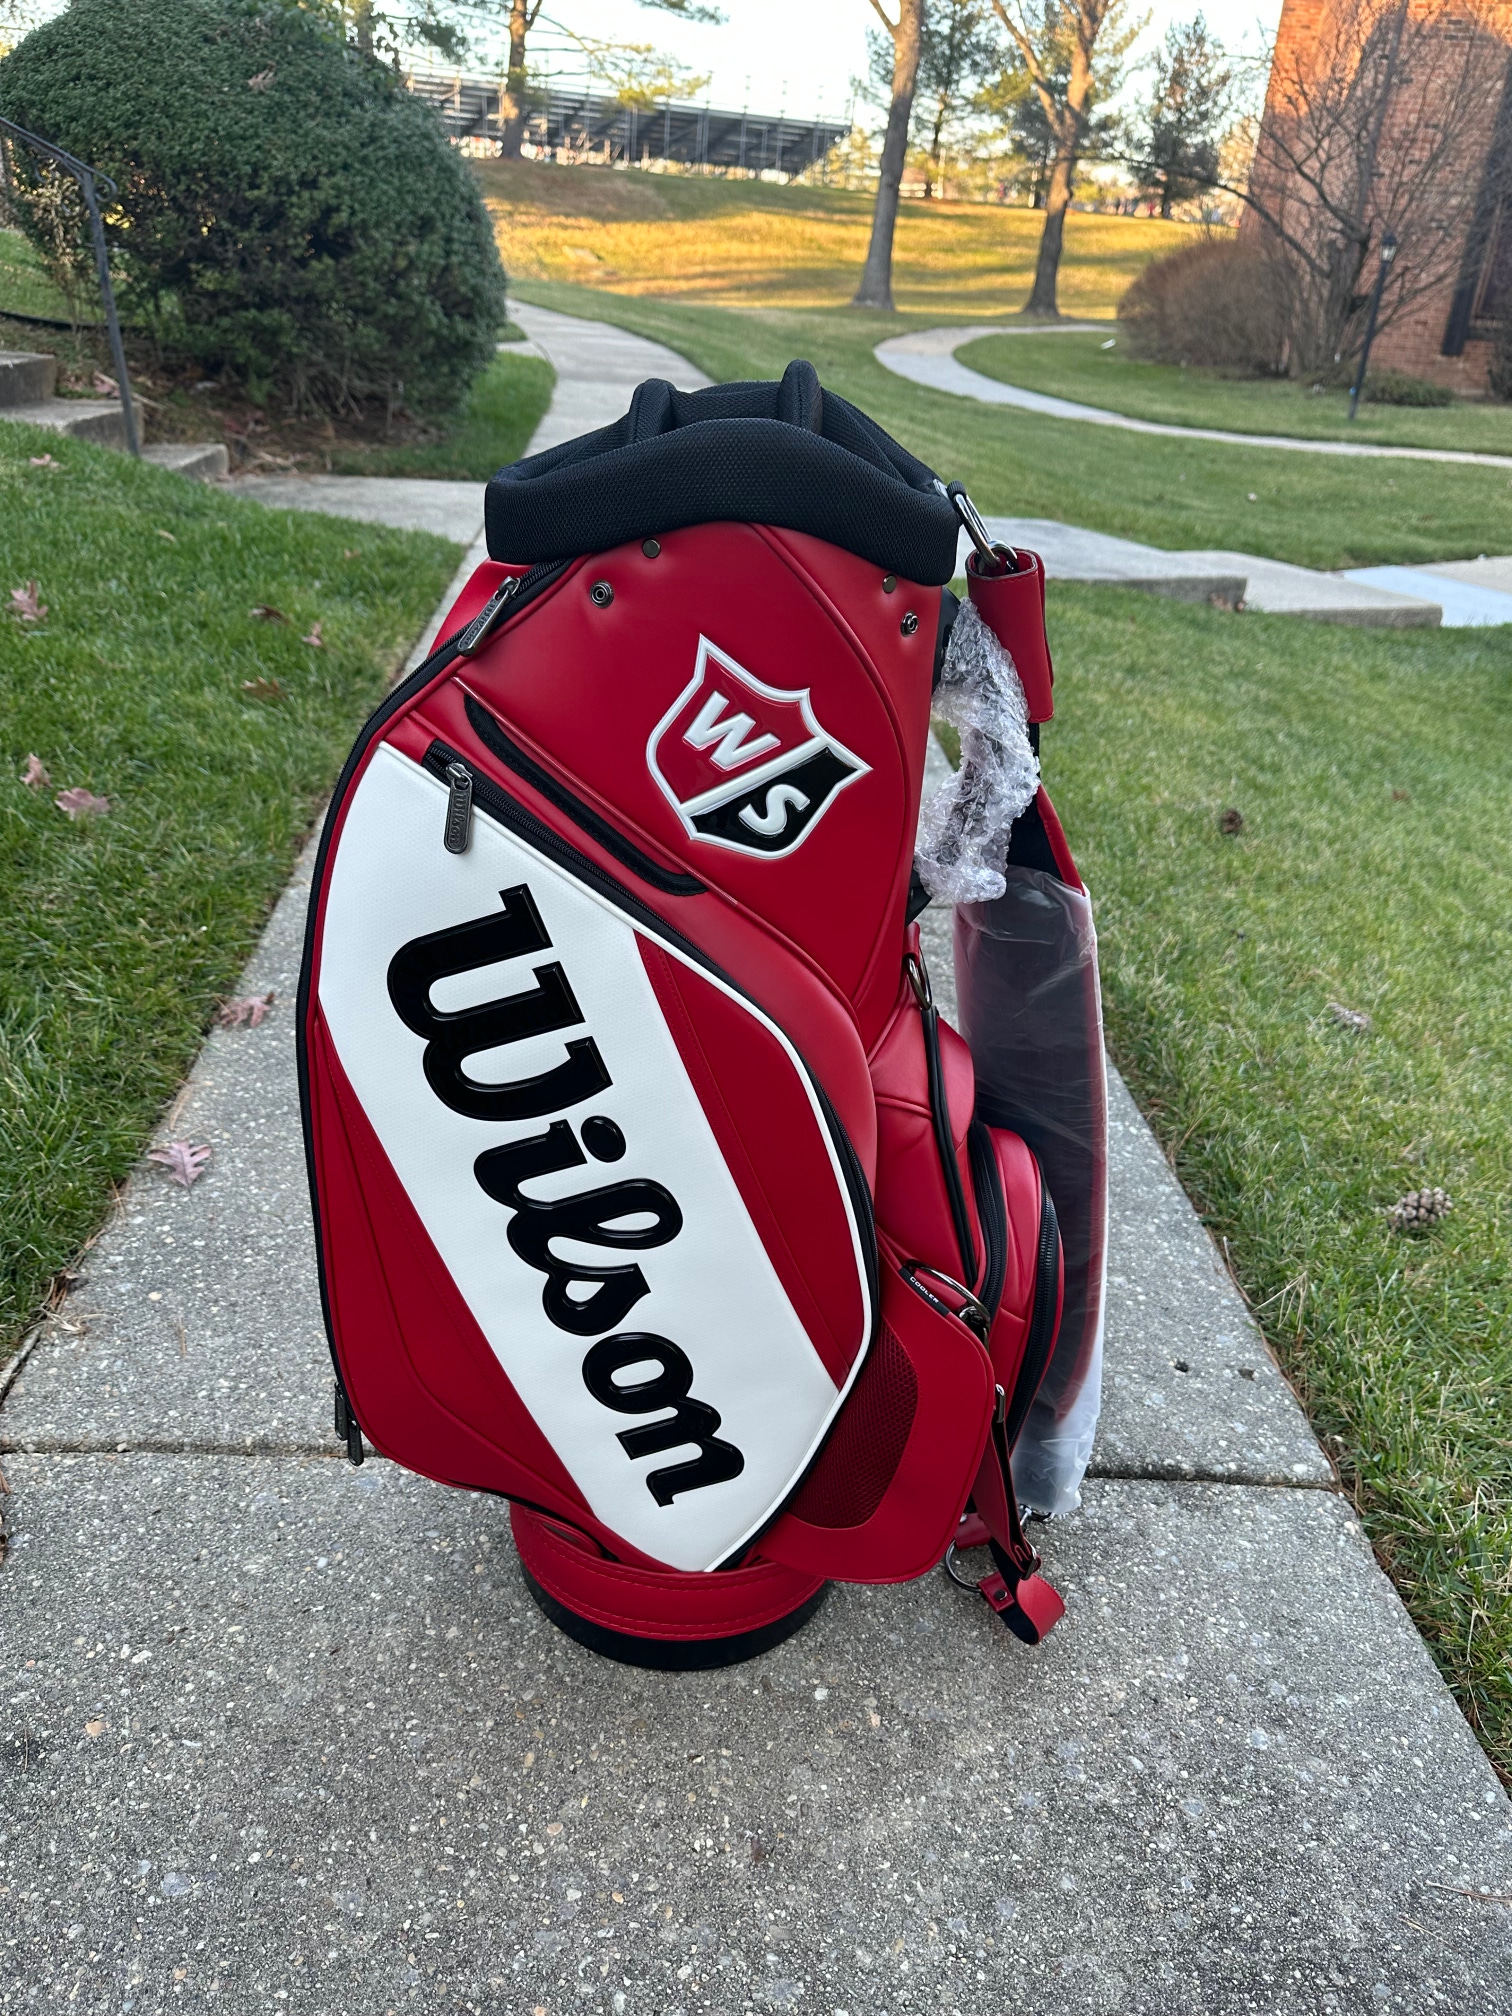 Wilson Tour Staff Golf Bag